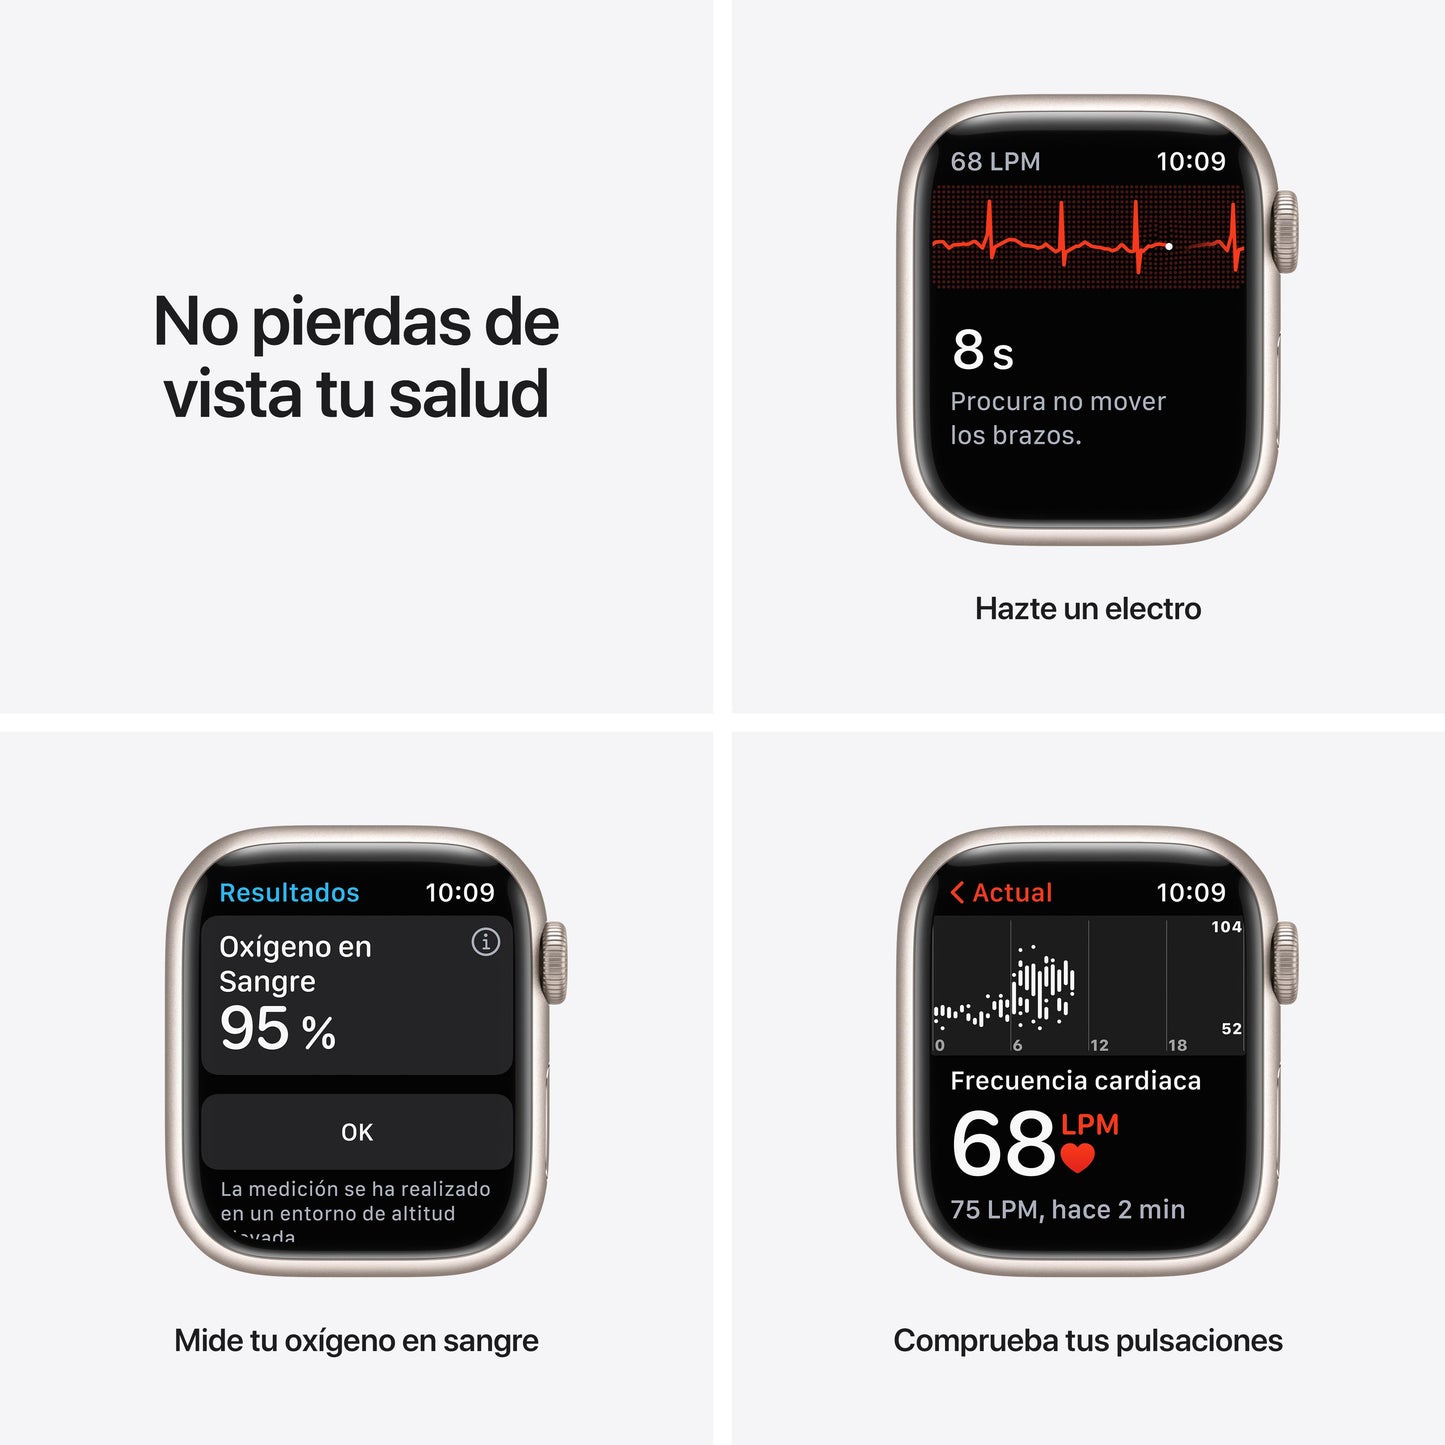 Apple Watch Nike Series 7 (GPS + Cellular) - Caja de aluminio en blanco estrella de 41 mm - Correa Nike Sport platino puro/negro - Talla única